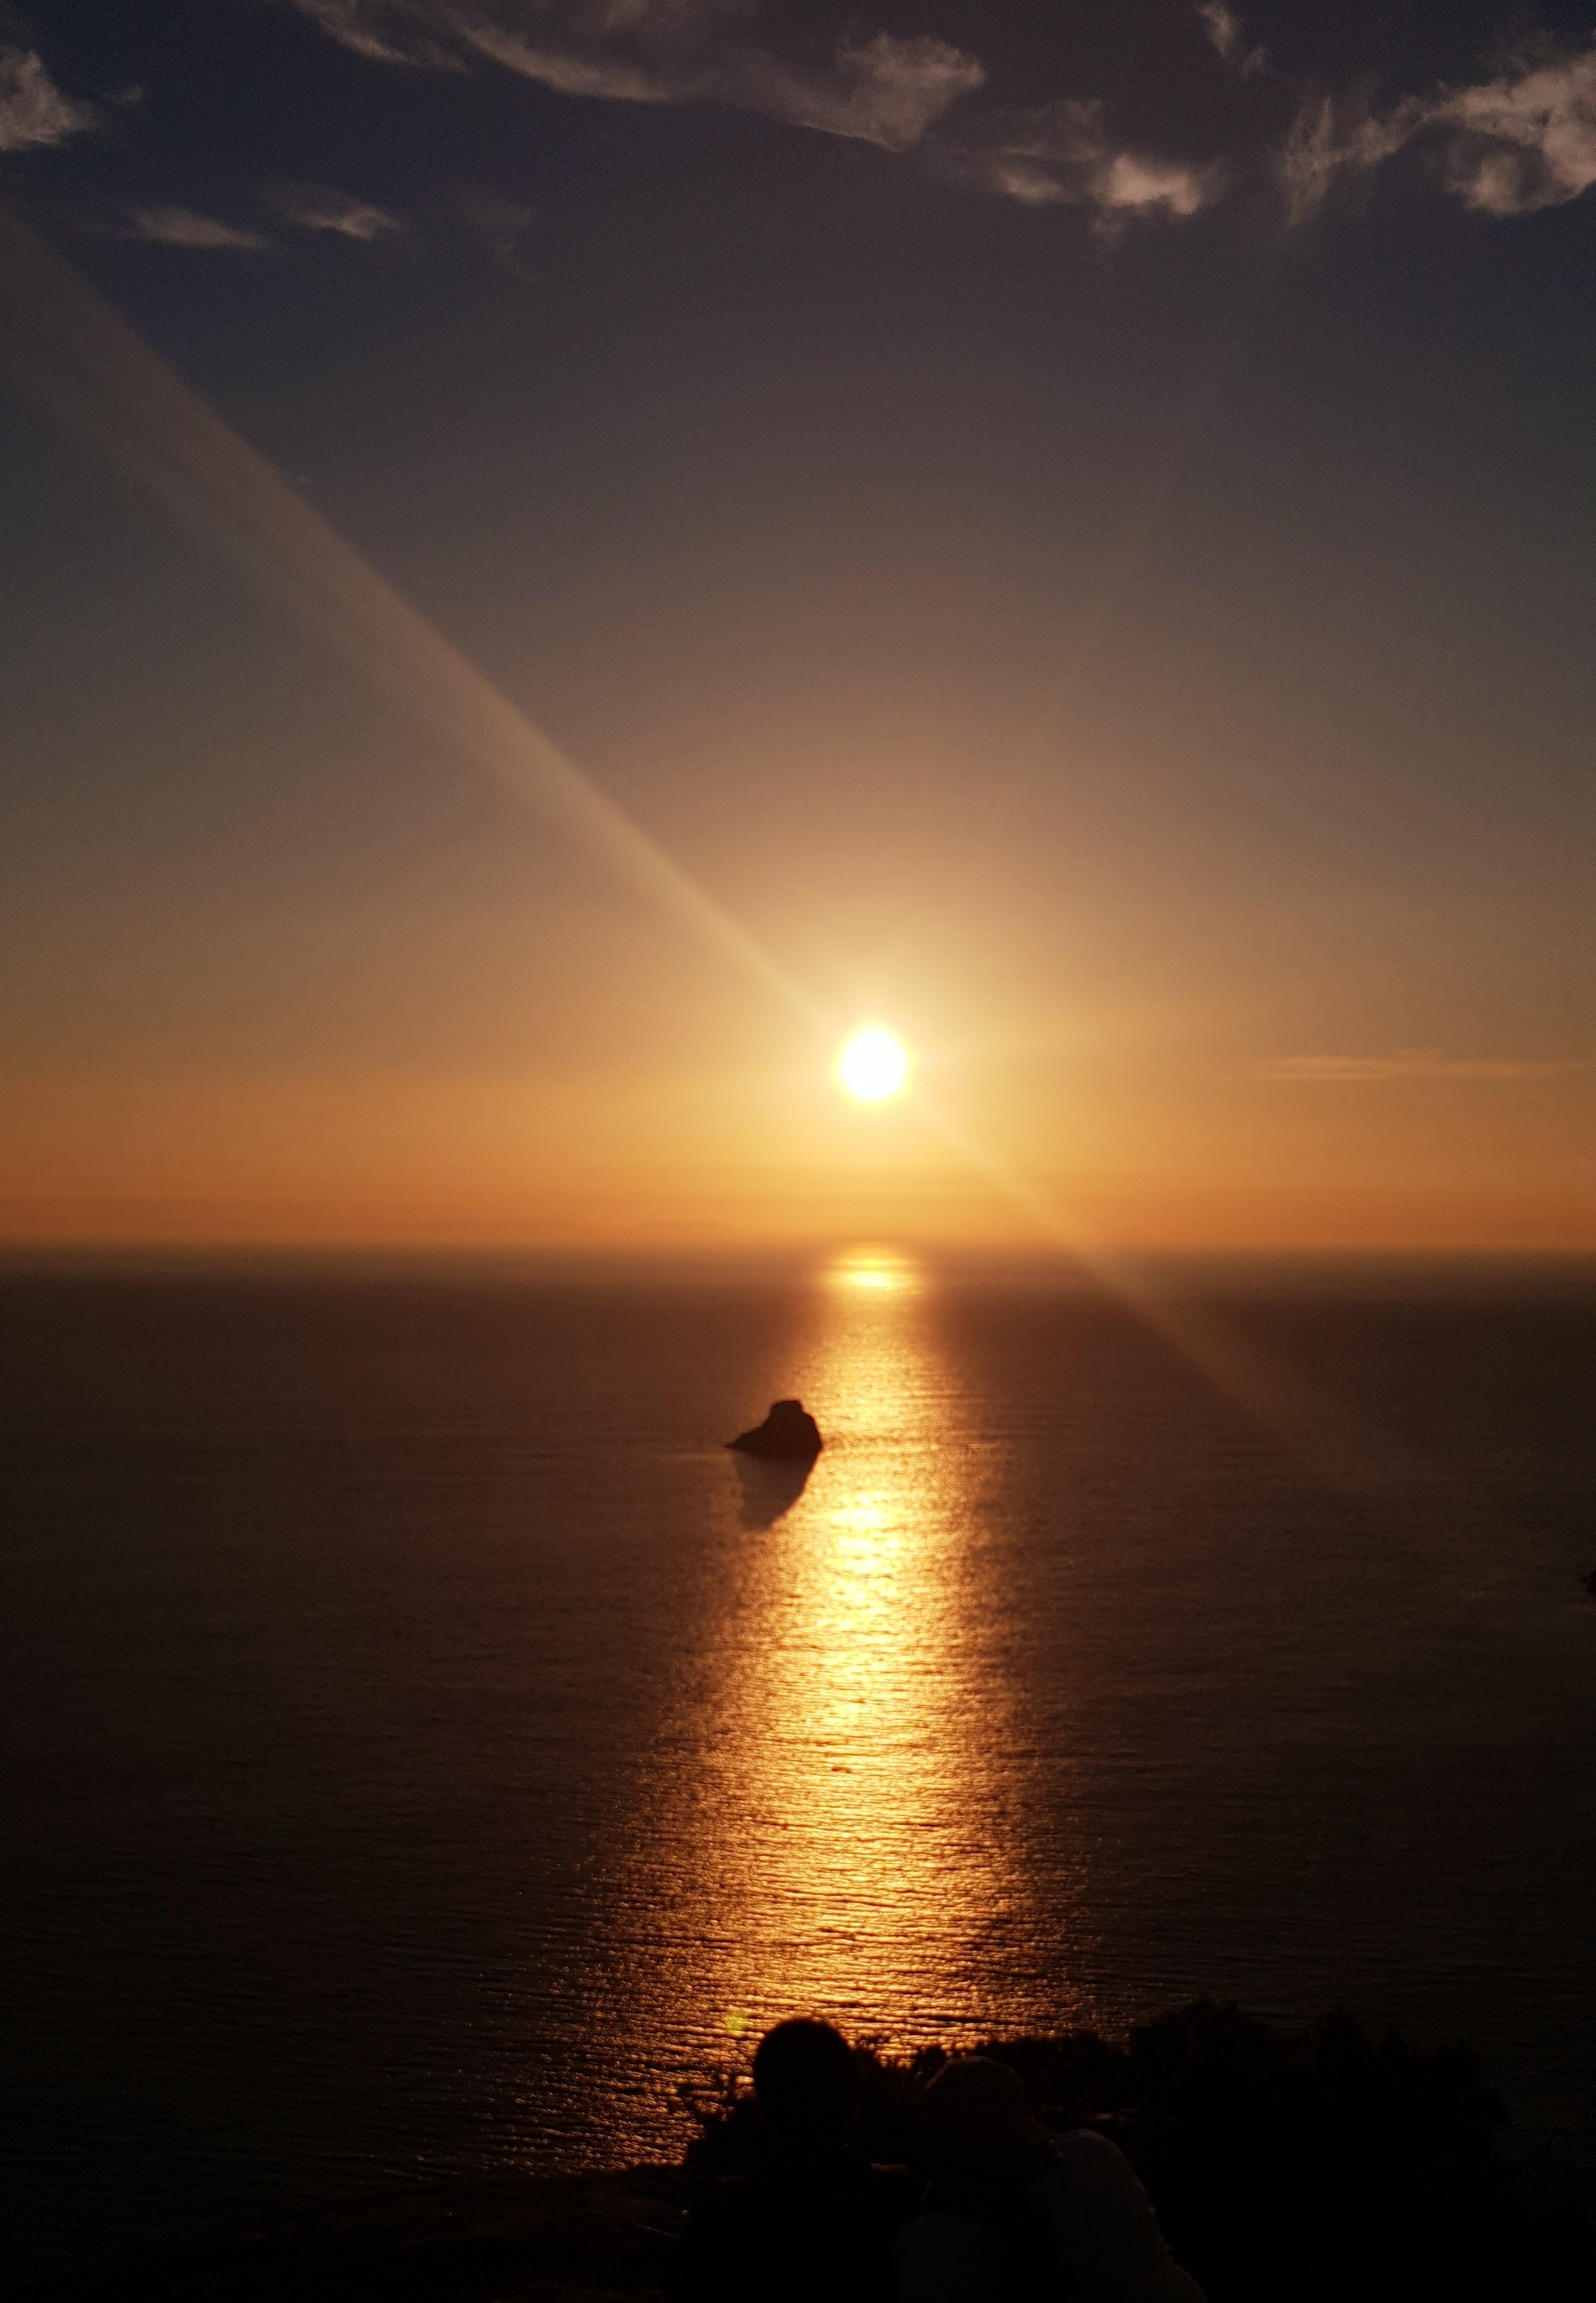 Sonnenuntergang am Kap Finisterre